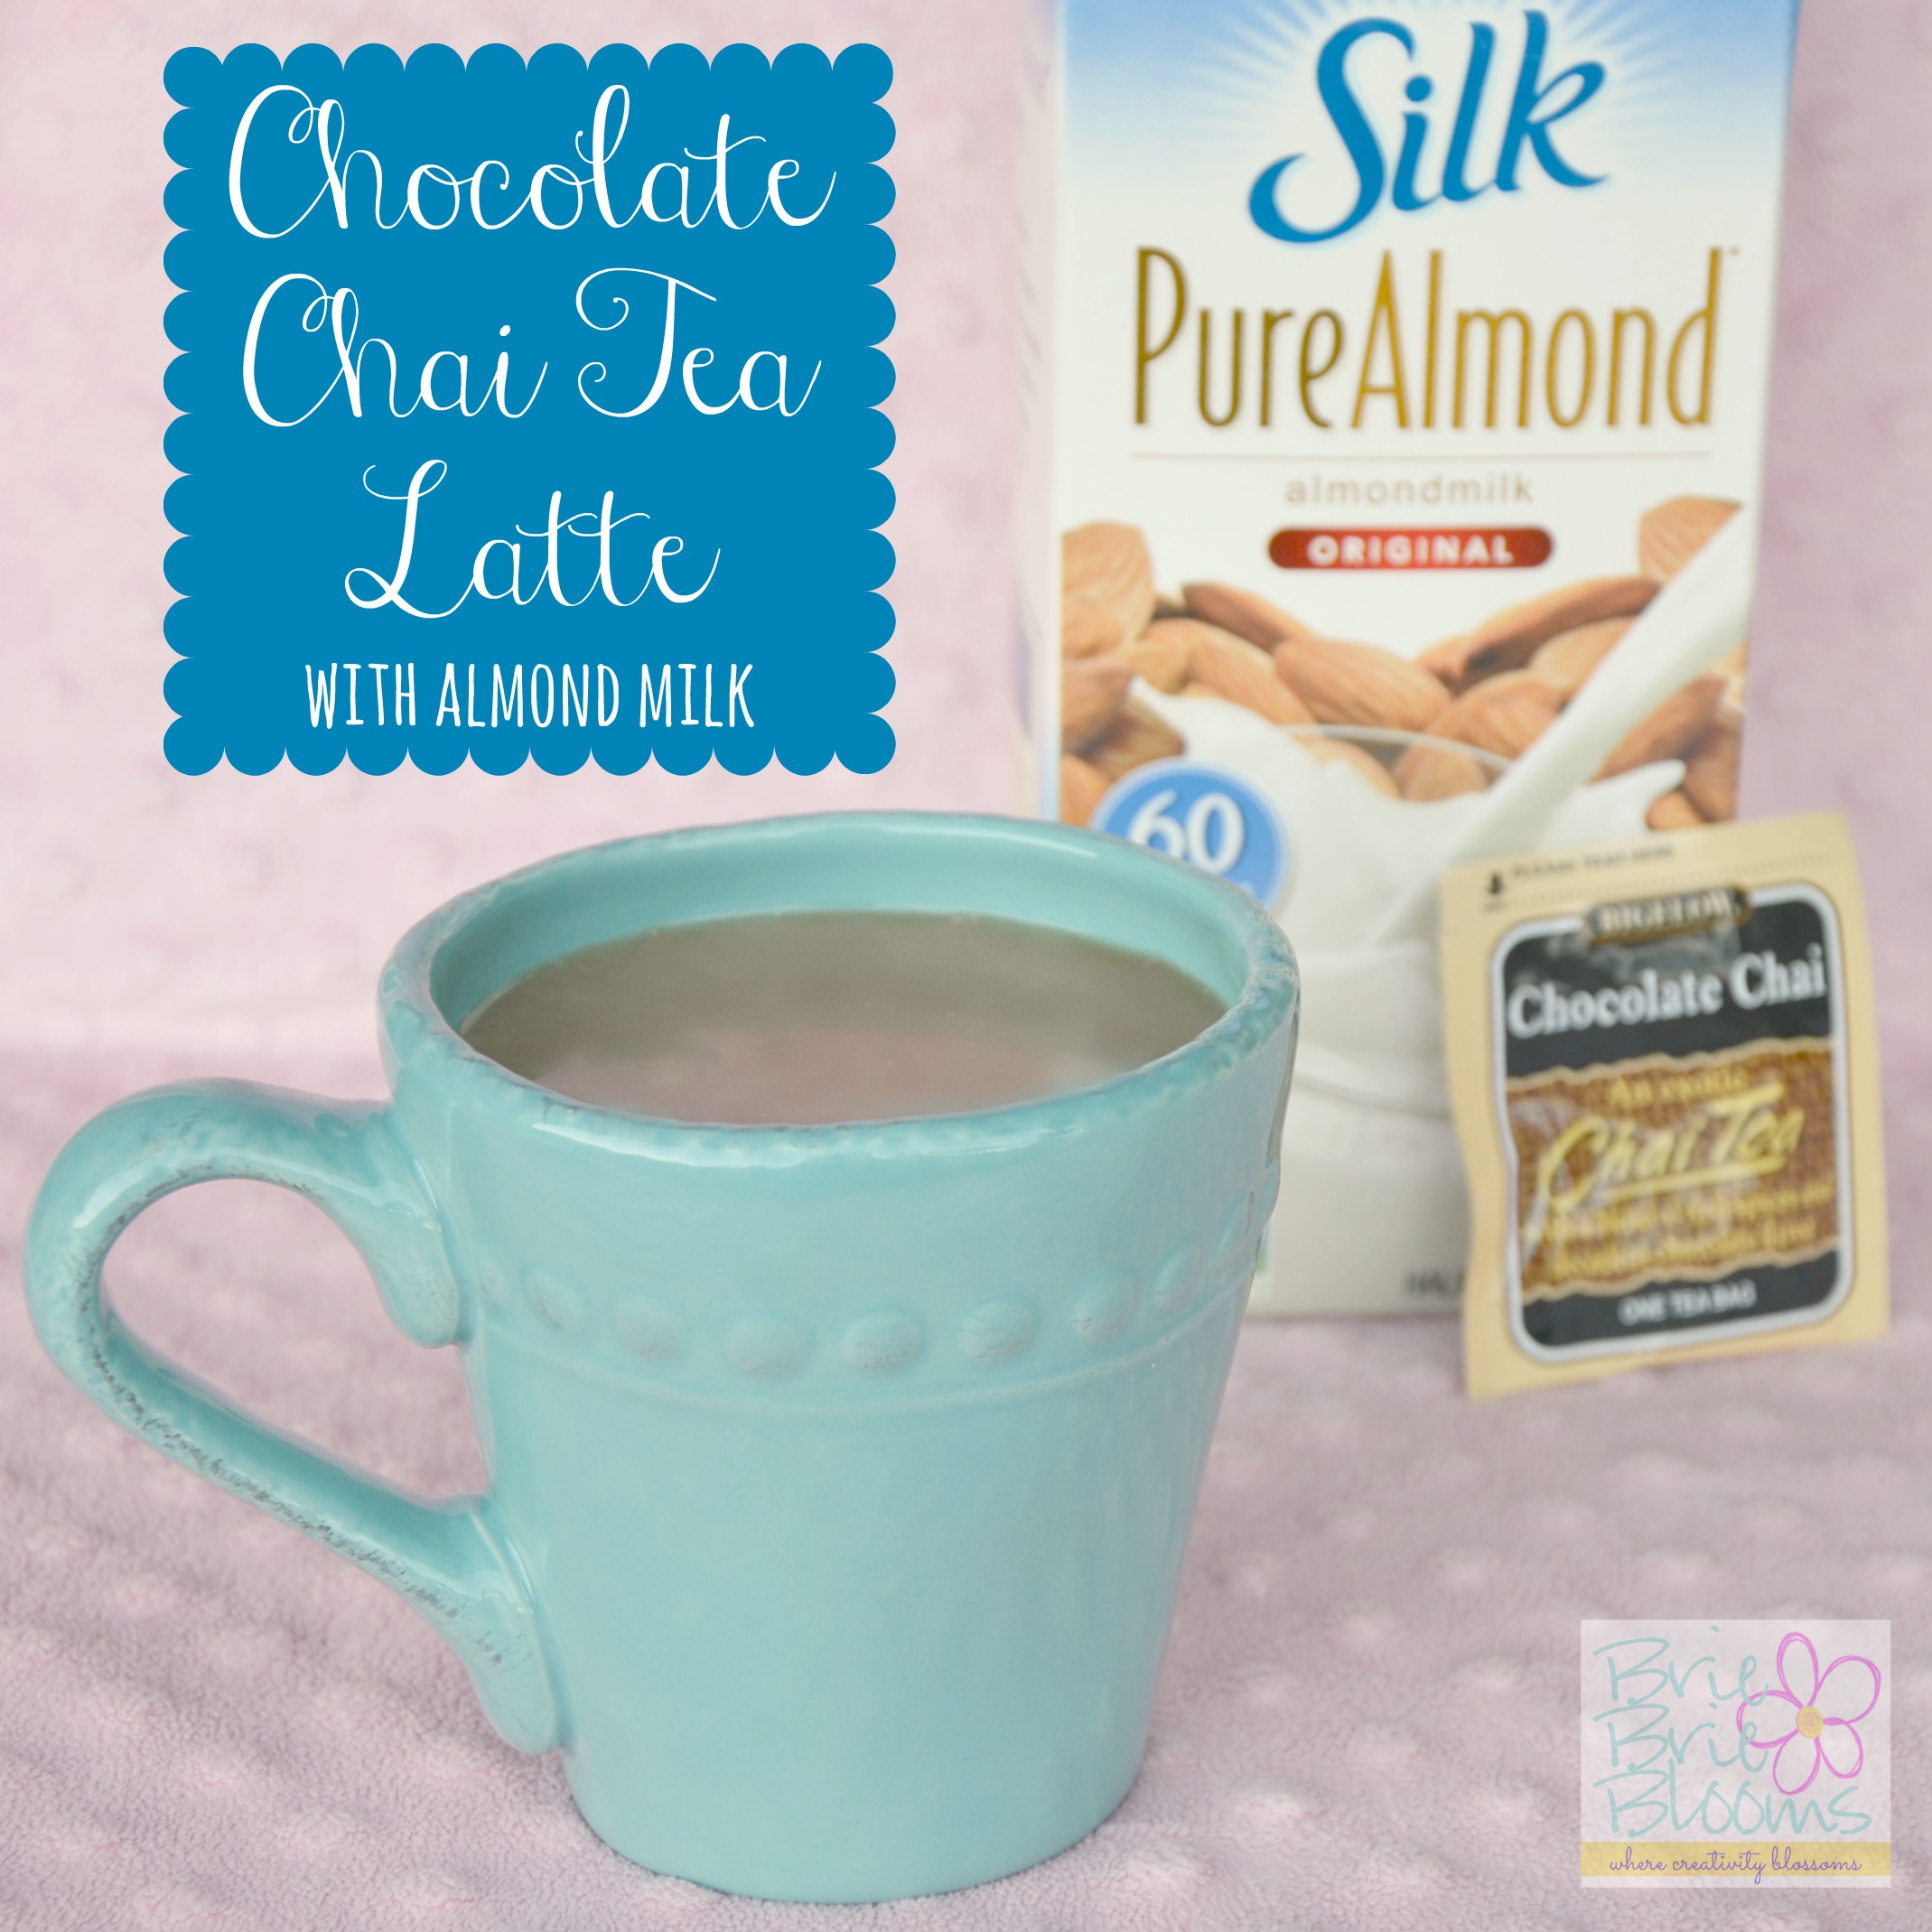 Chocolate Chai Tea Latte with Almond Milk